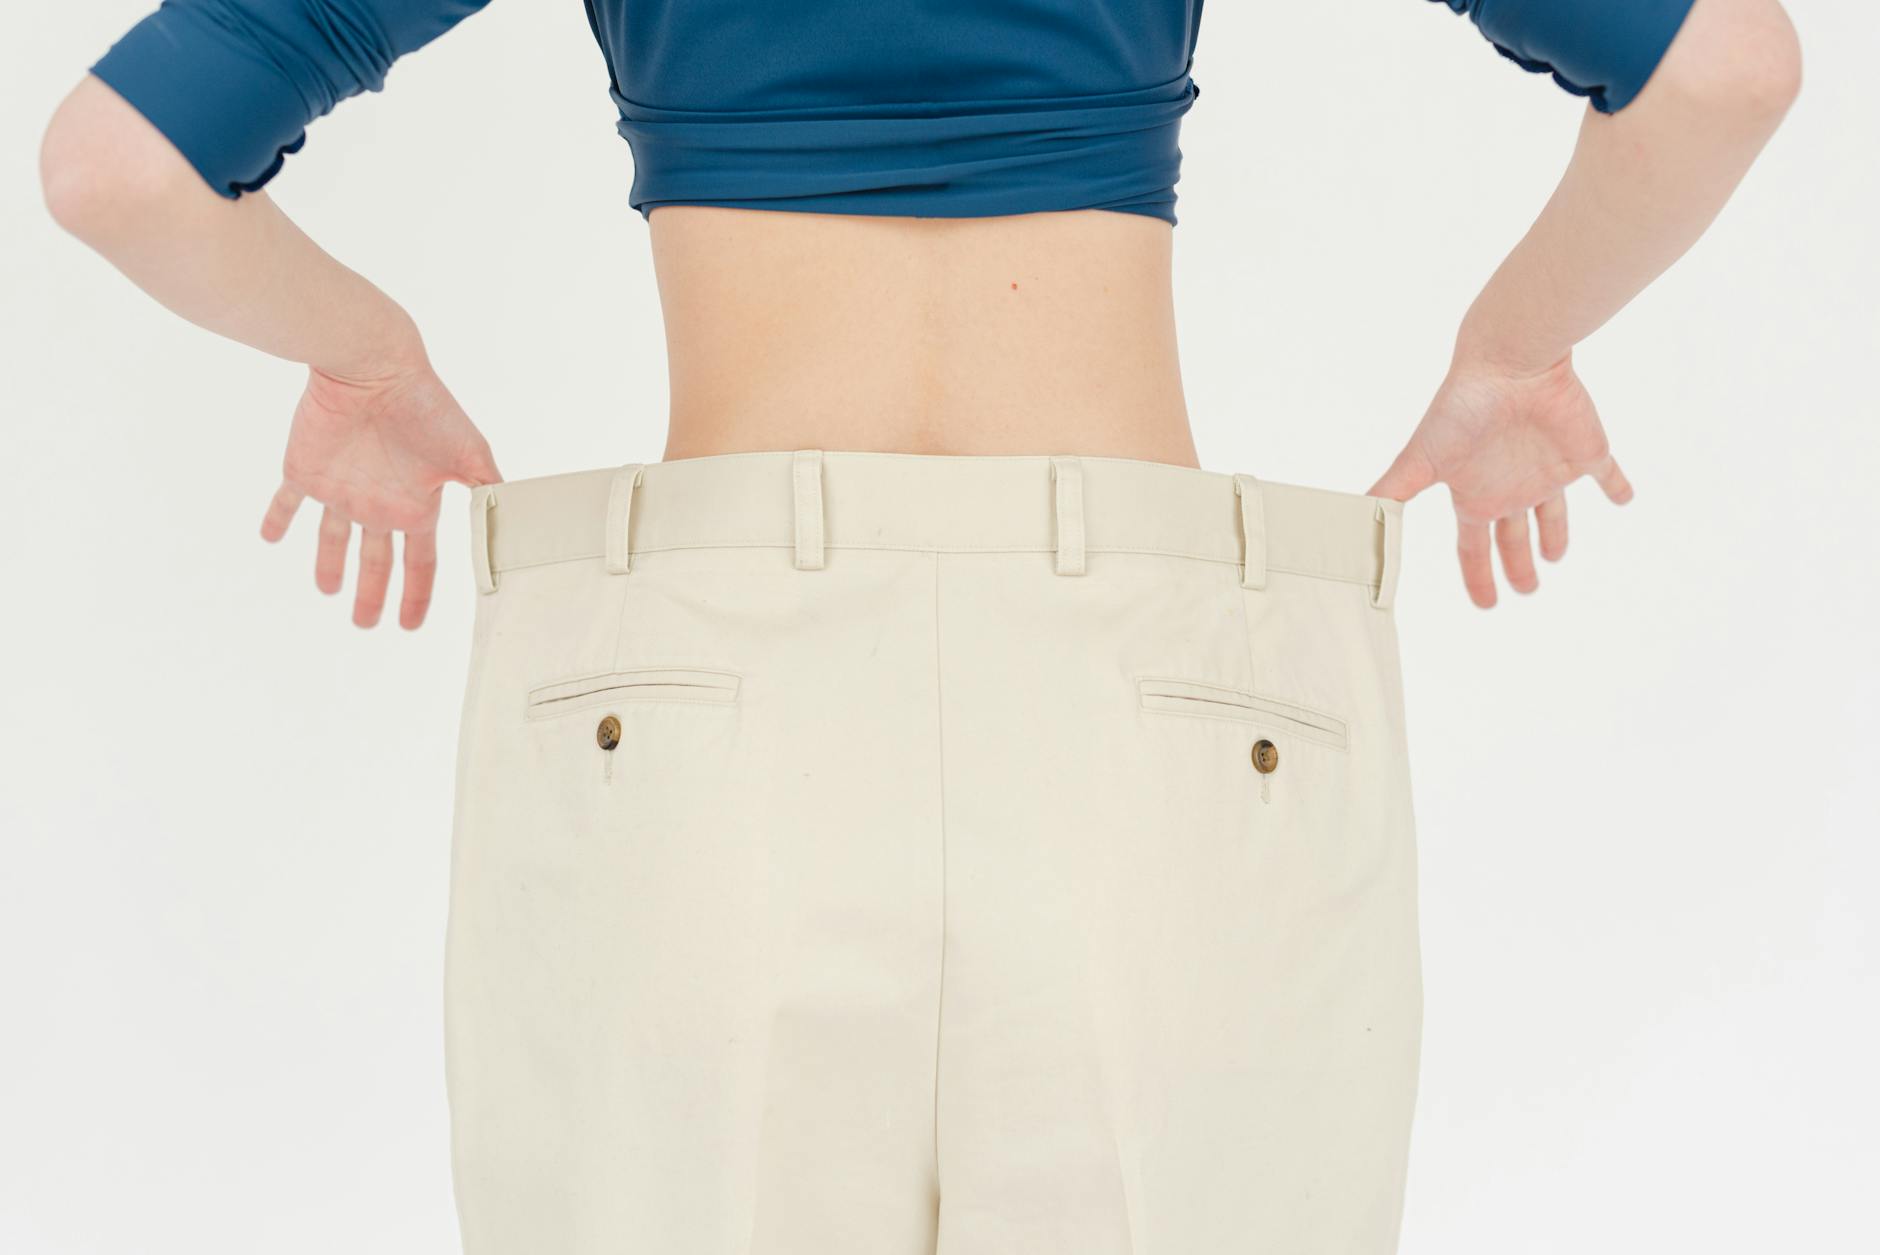 crop slender woman in oversized pants